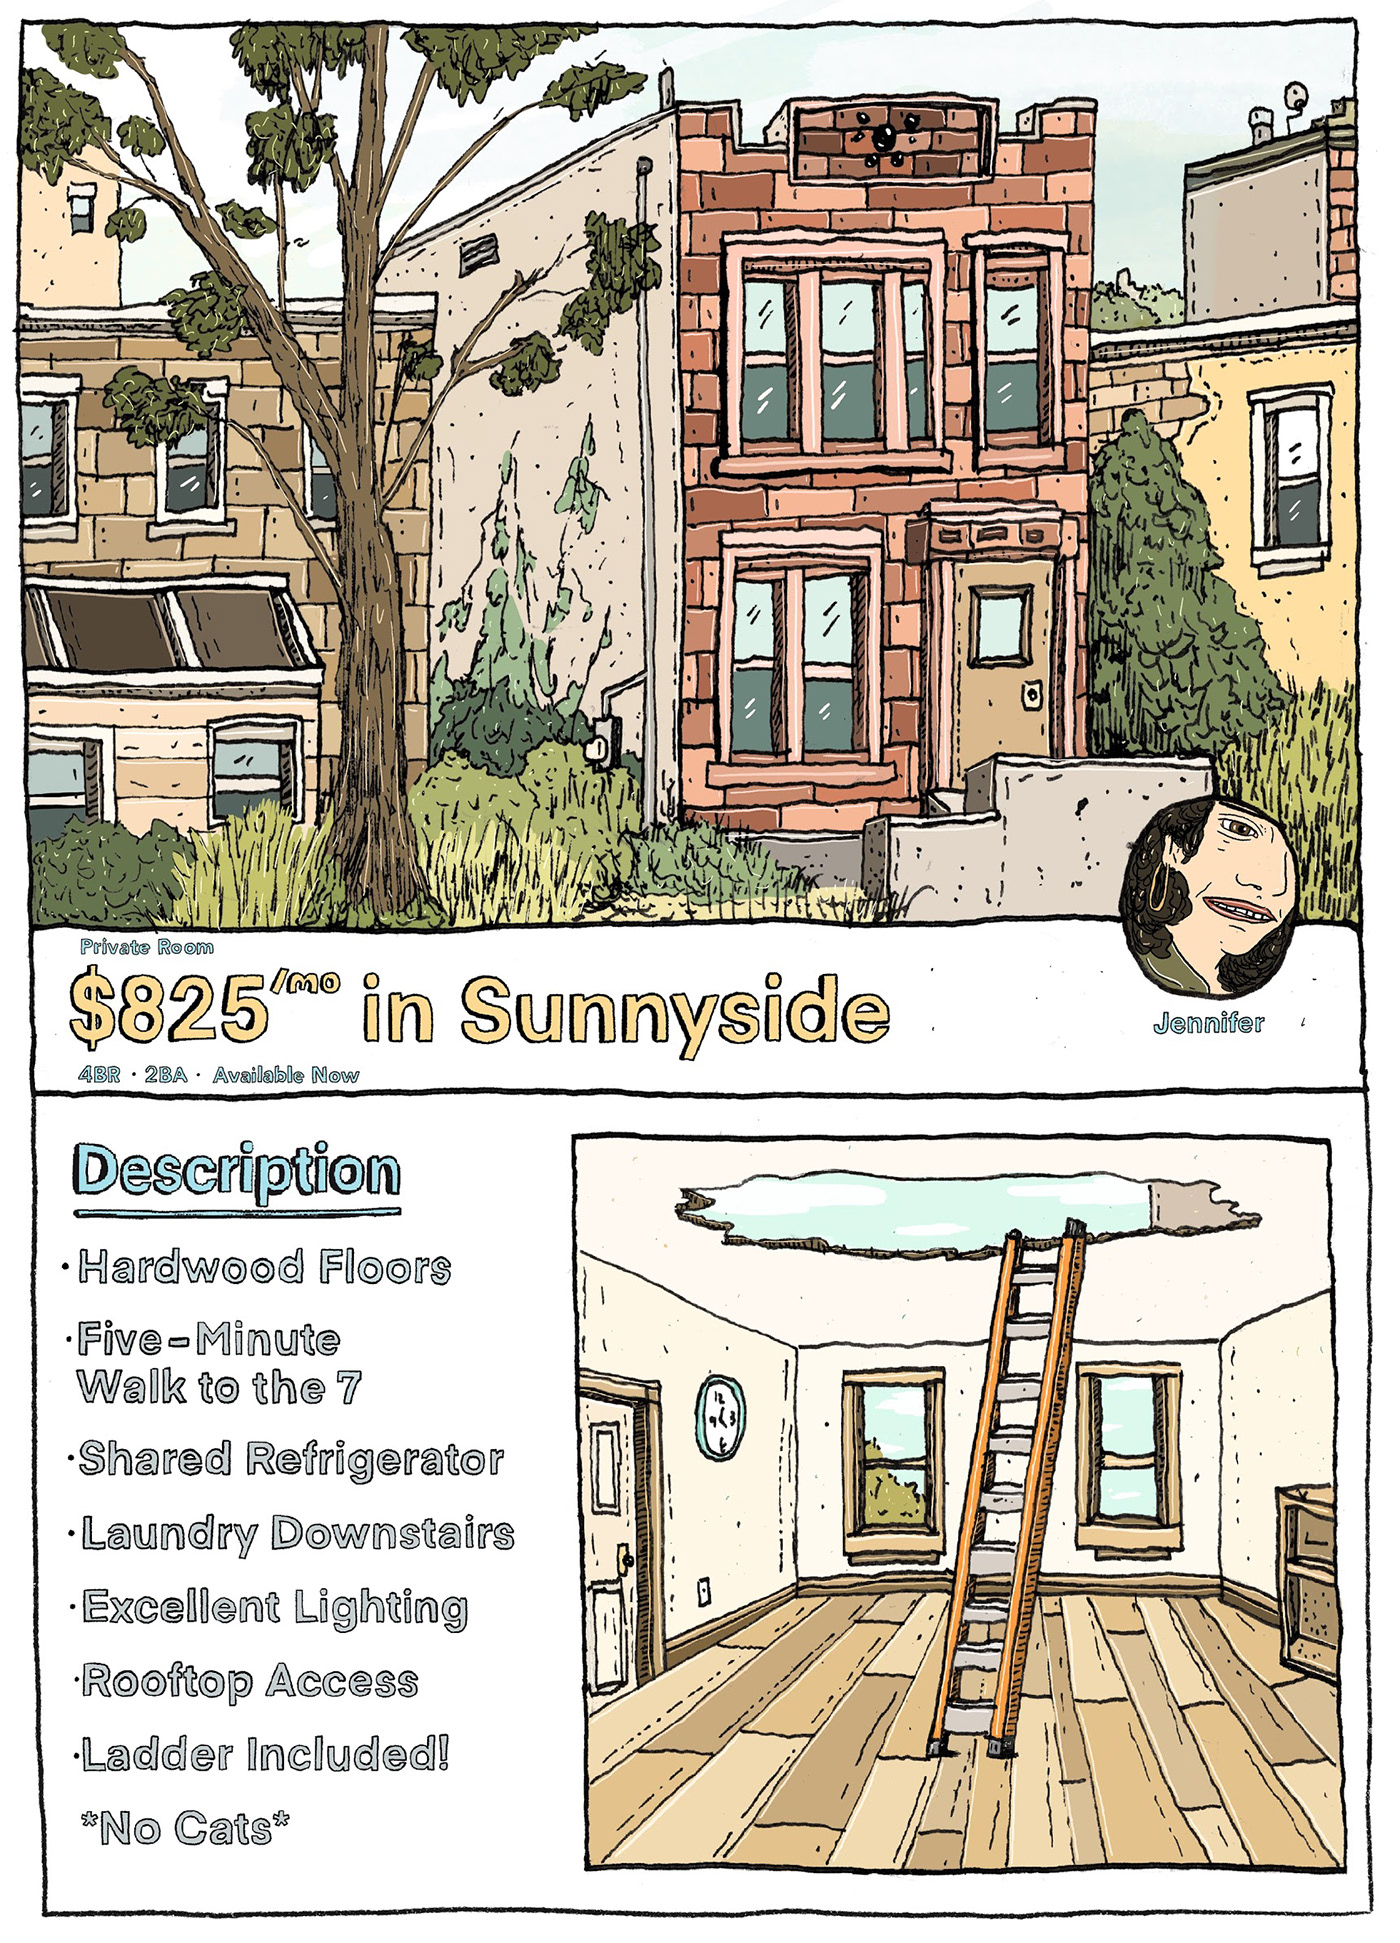 apartments comic comic book illustration Drawing  Editorial Illustration humor New York painting  